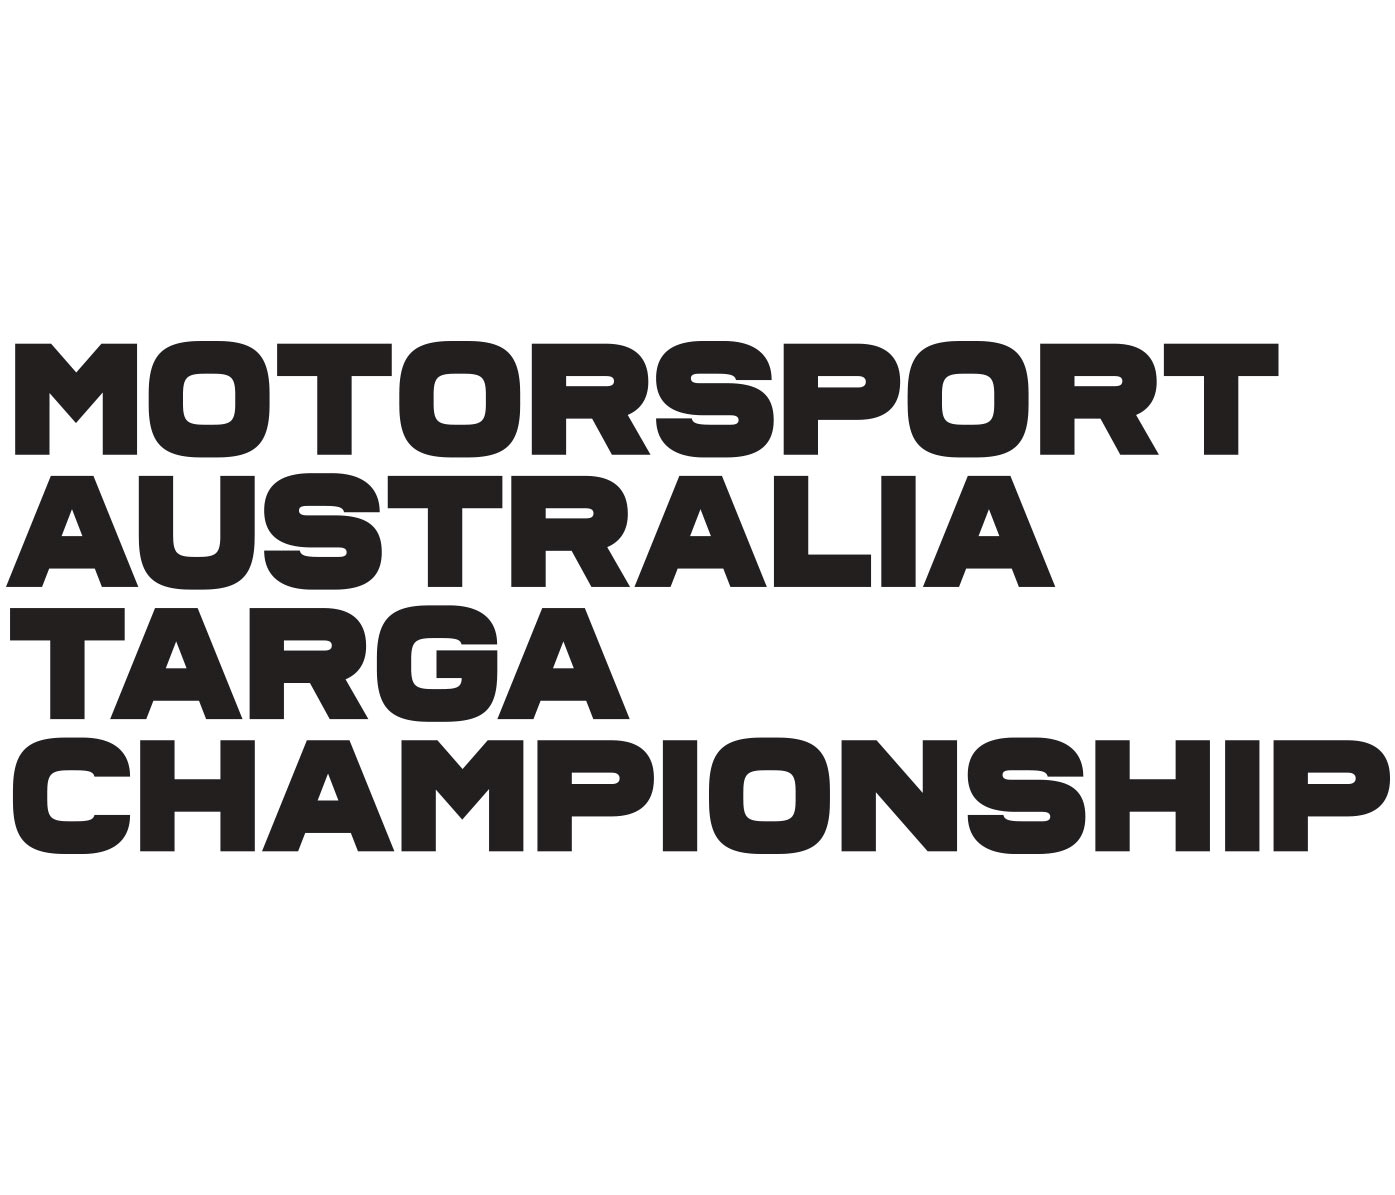 Motorsport Australia Targa Championship